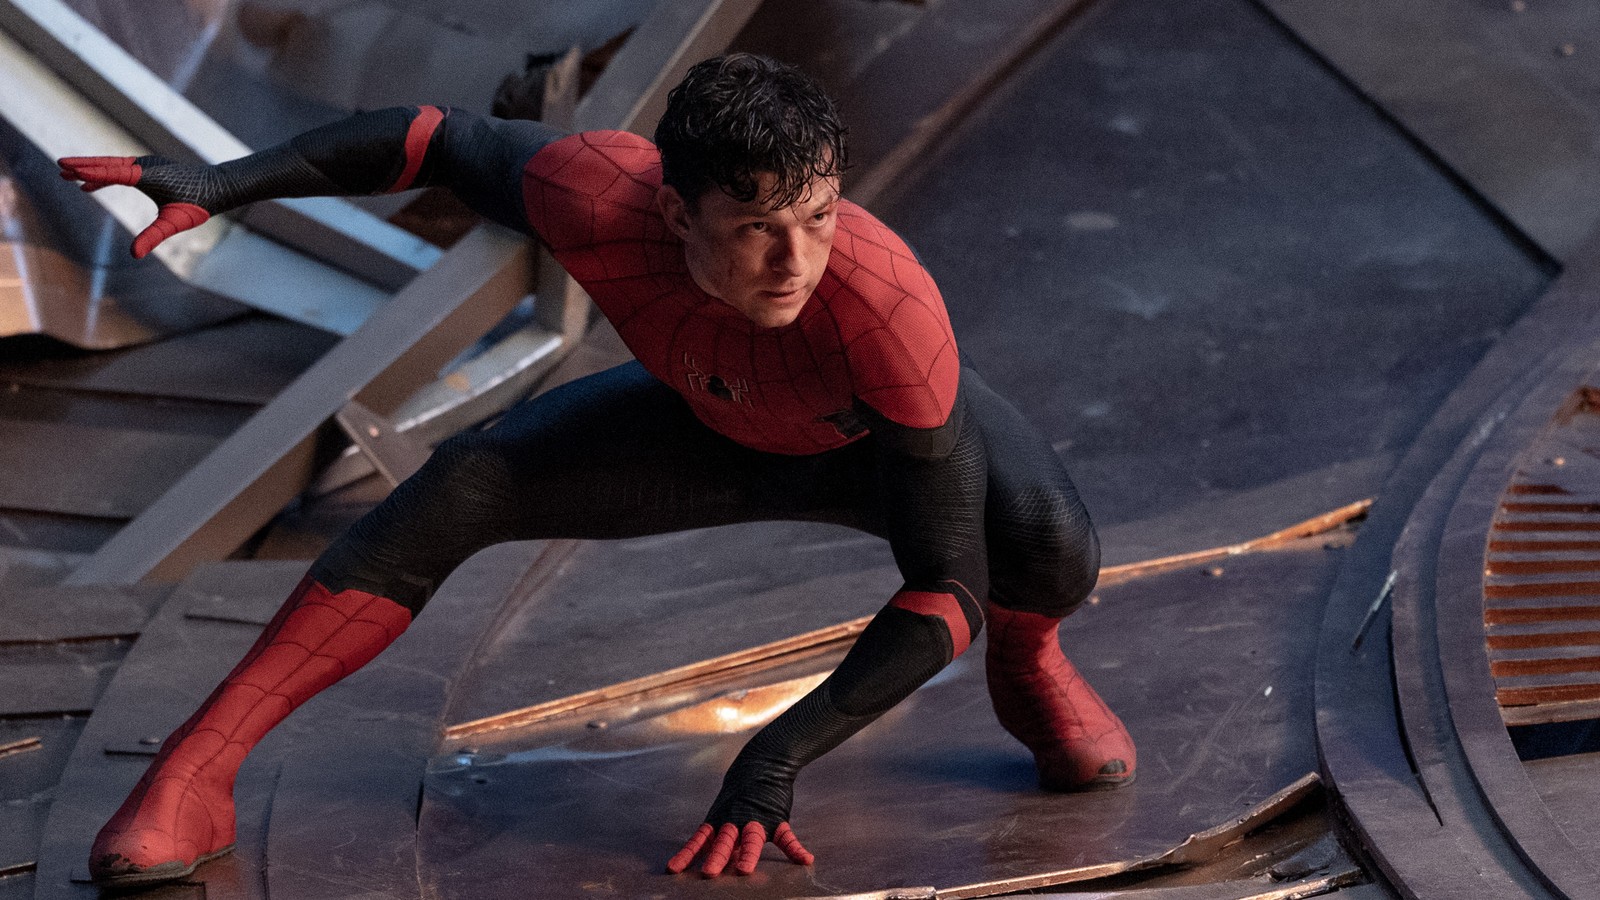 The Joyful Pandering of 'Spider-Man: No Way Home' - The Atlantic